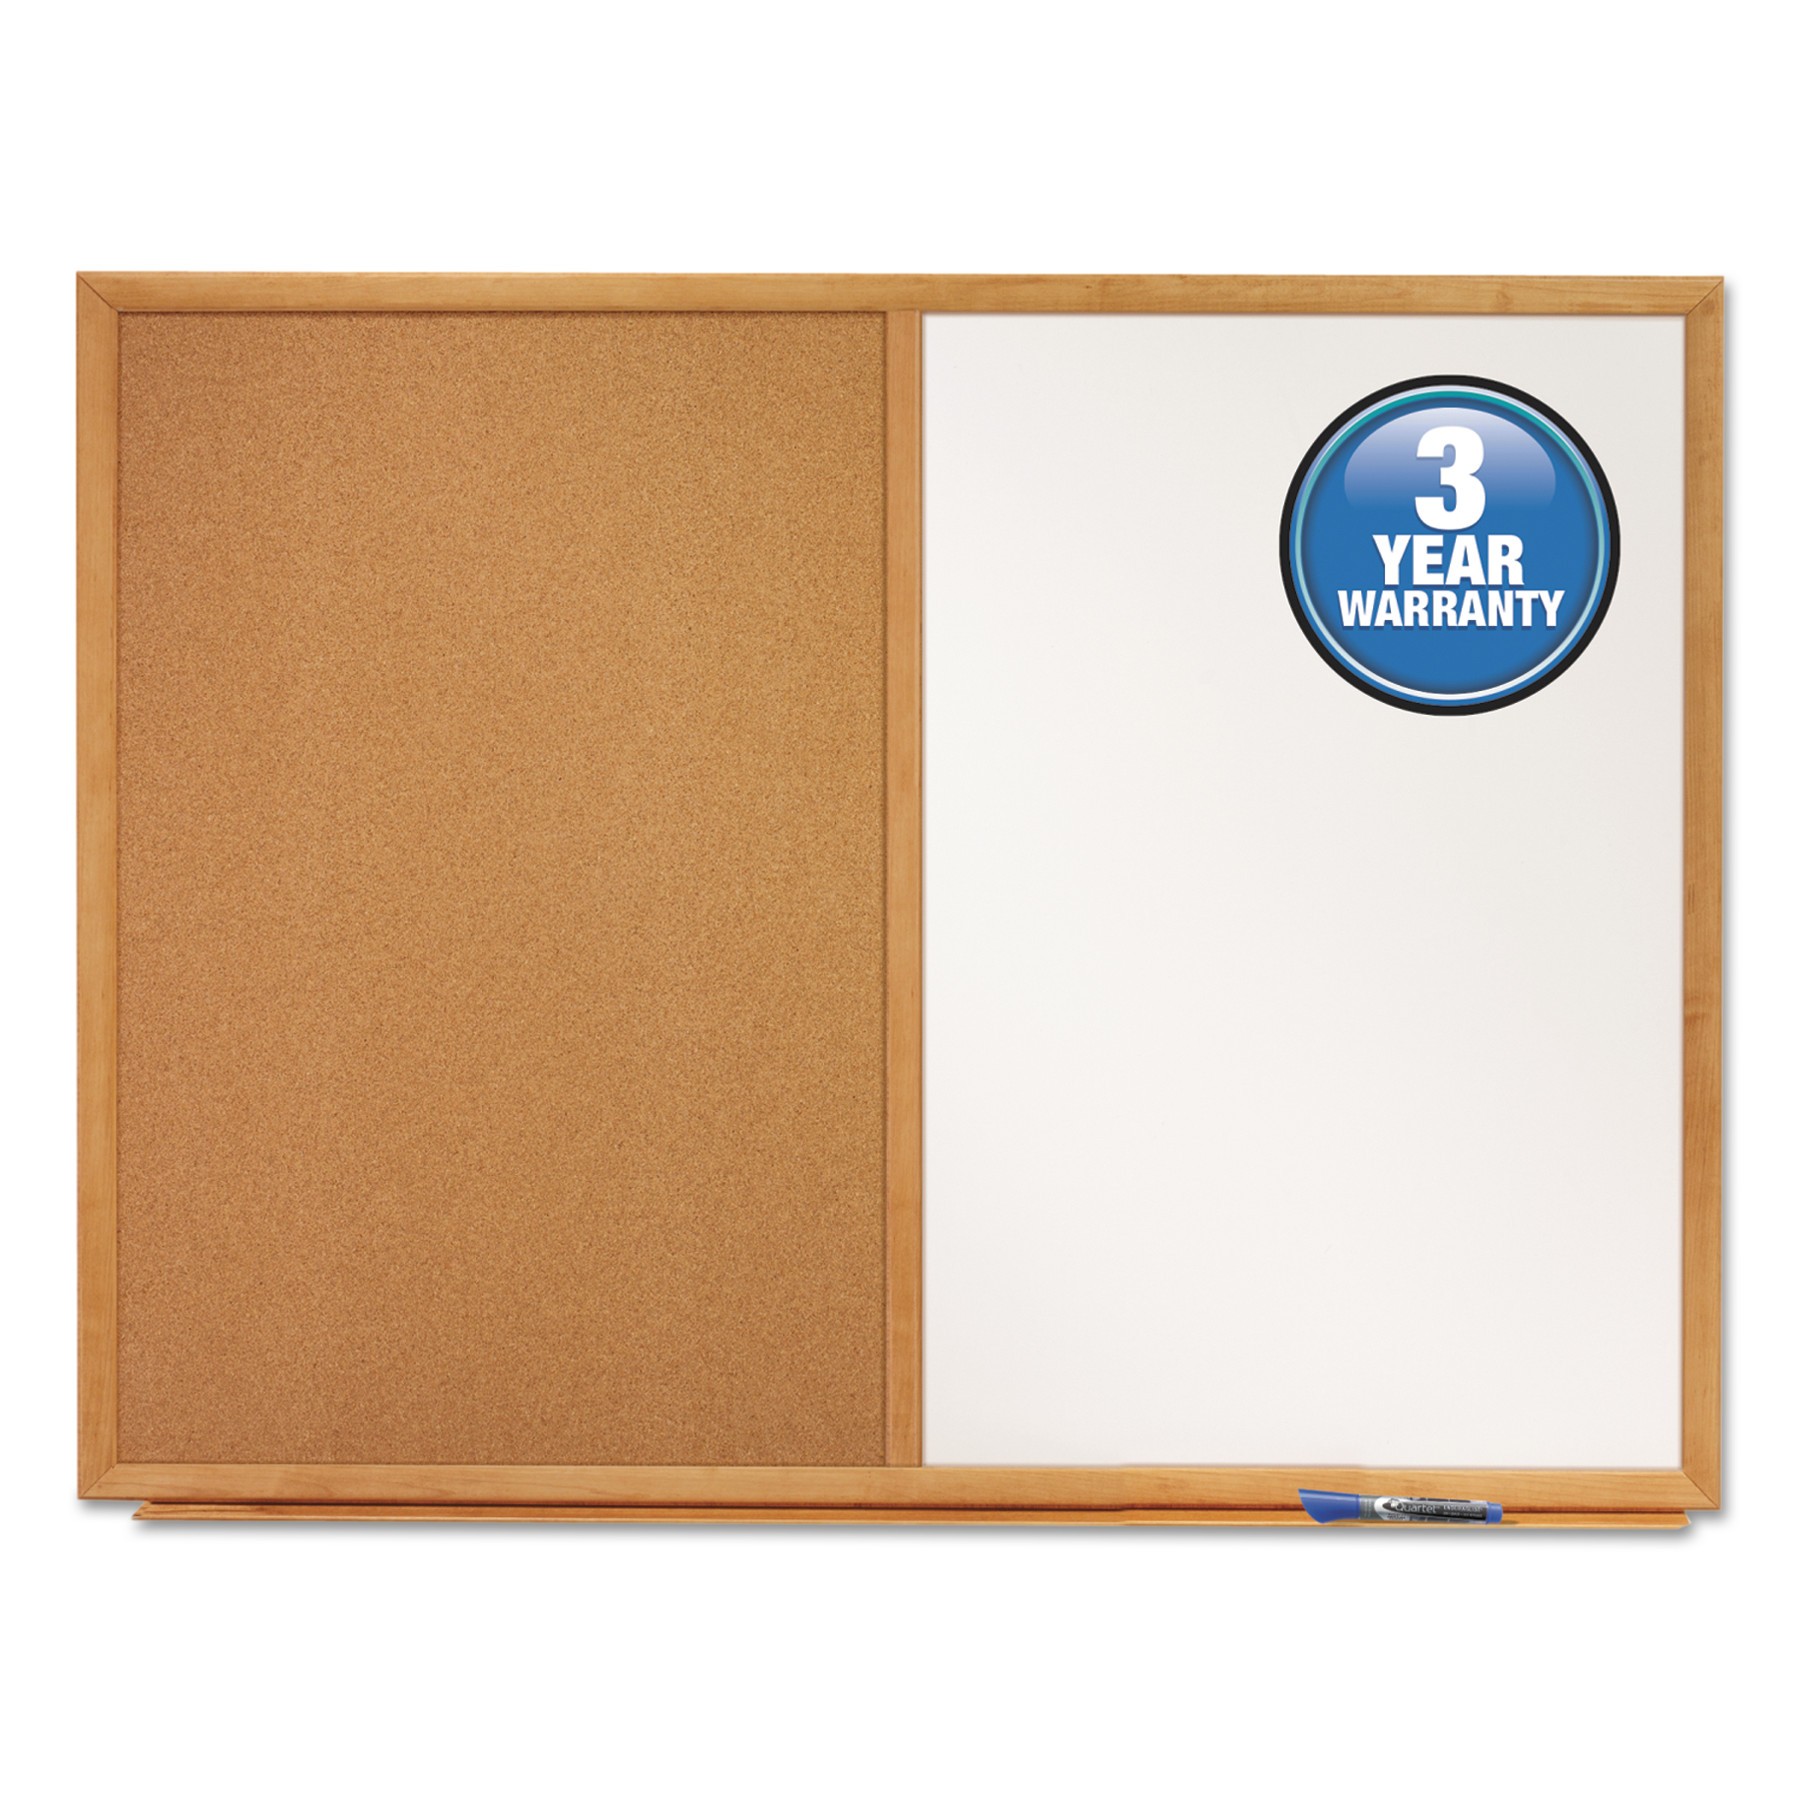 Bulletin/Dry-Erase Board, Melamine/Cork, 36 x 24, White/Brown, Oak Finish Frame